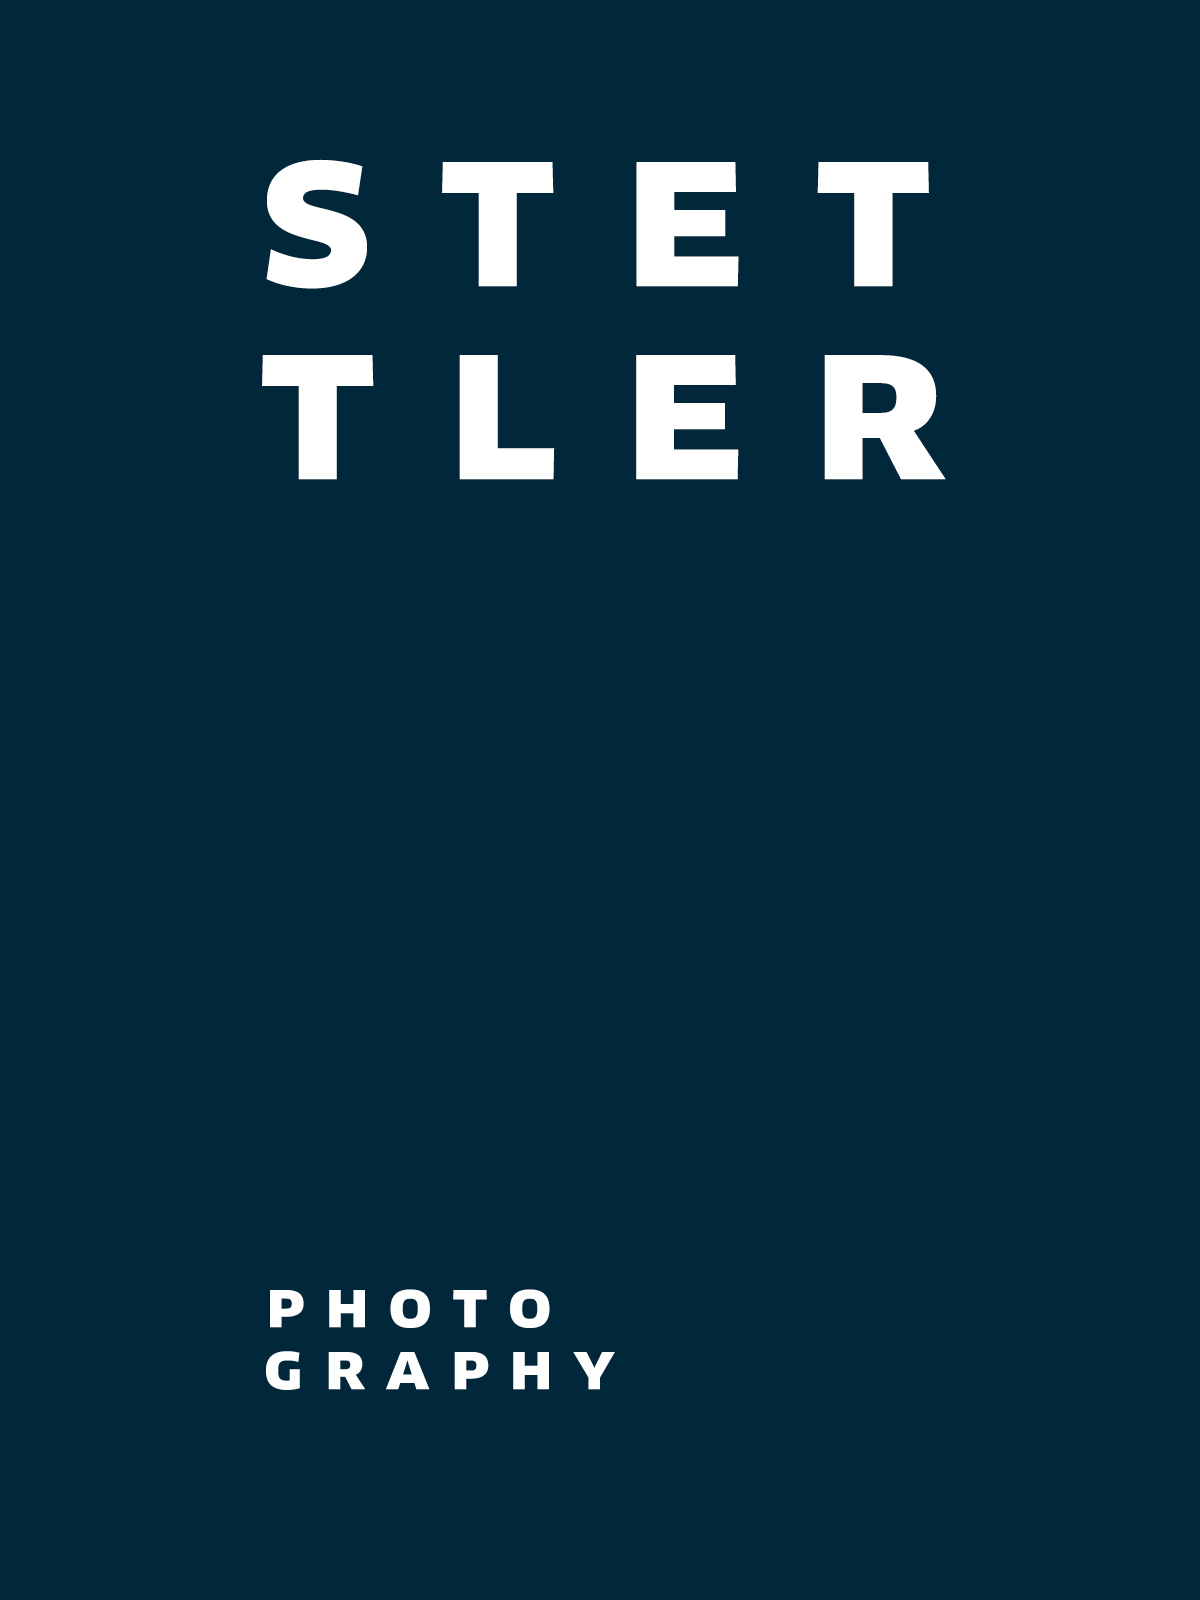 Stettler Photography